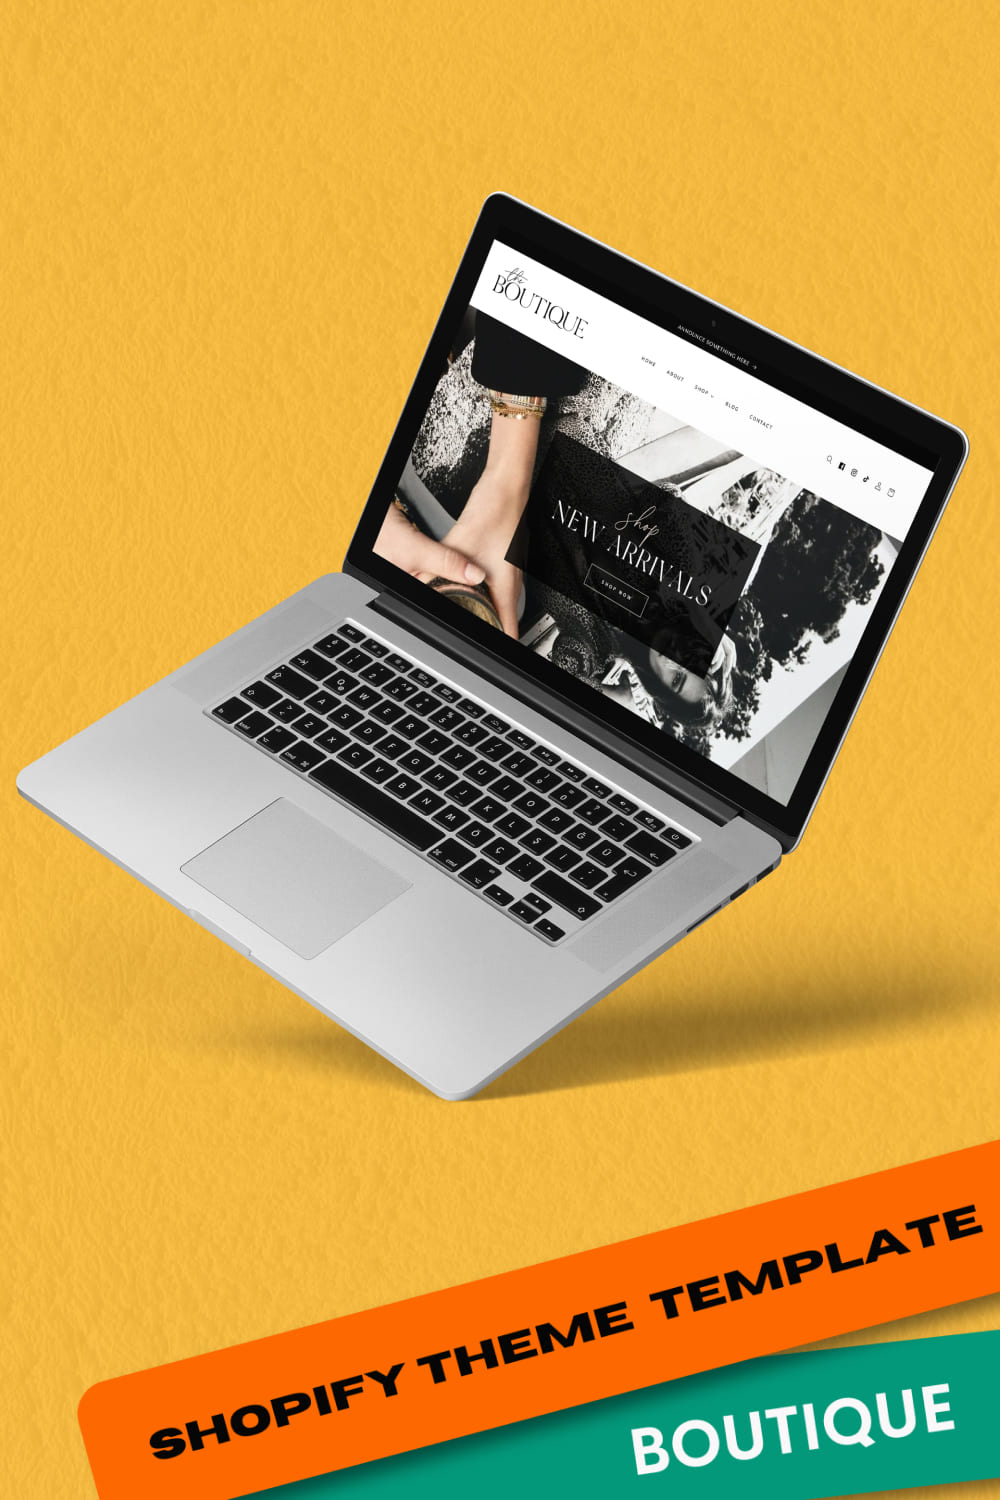 Shopify Theme Boutique Template - laptop mockup for pinterest image.